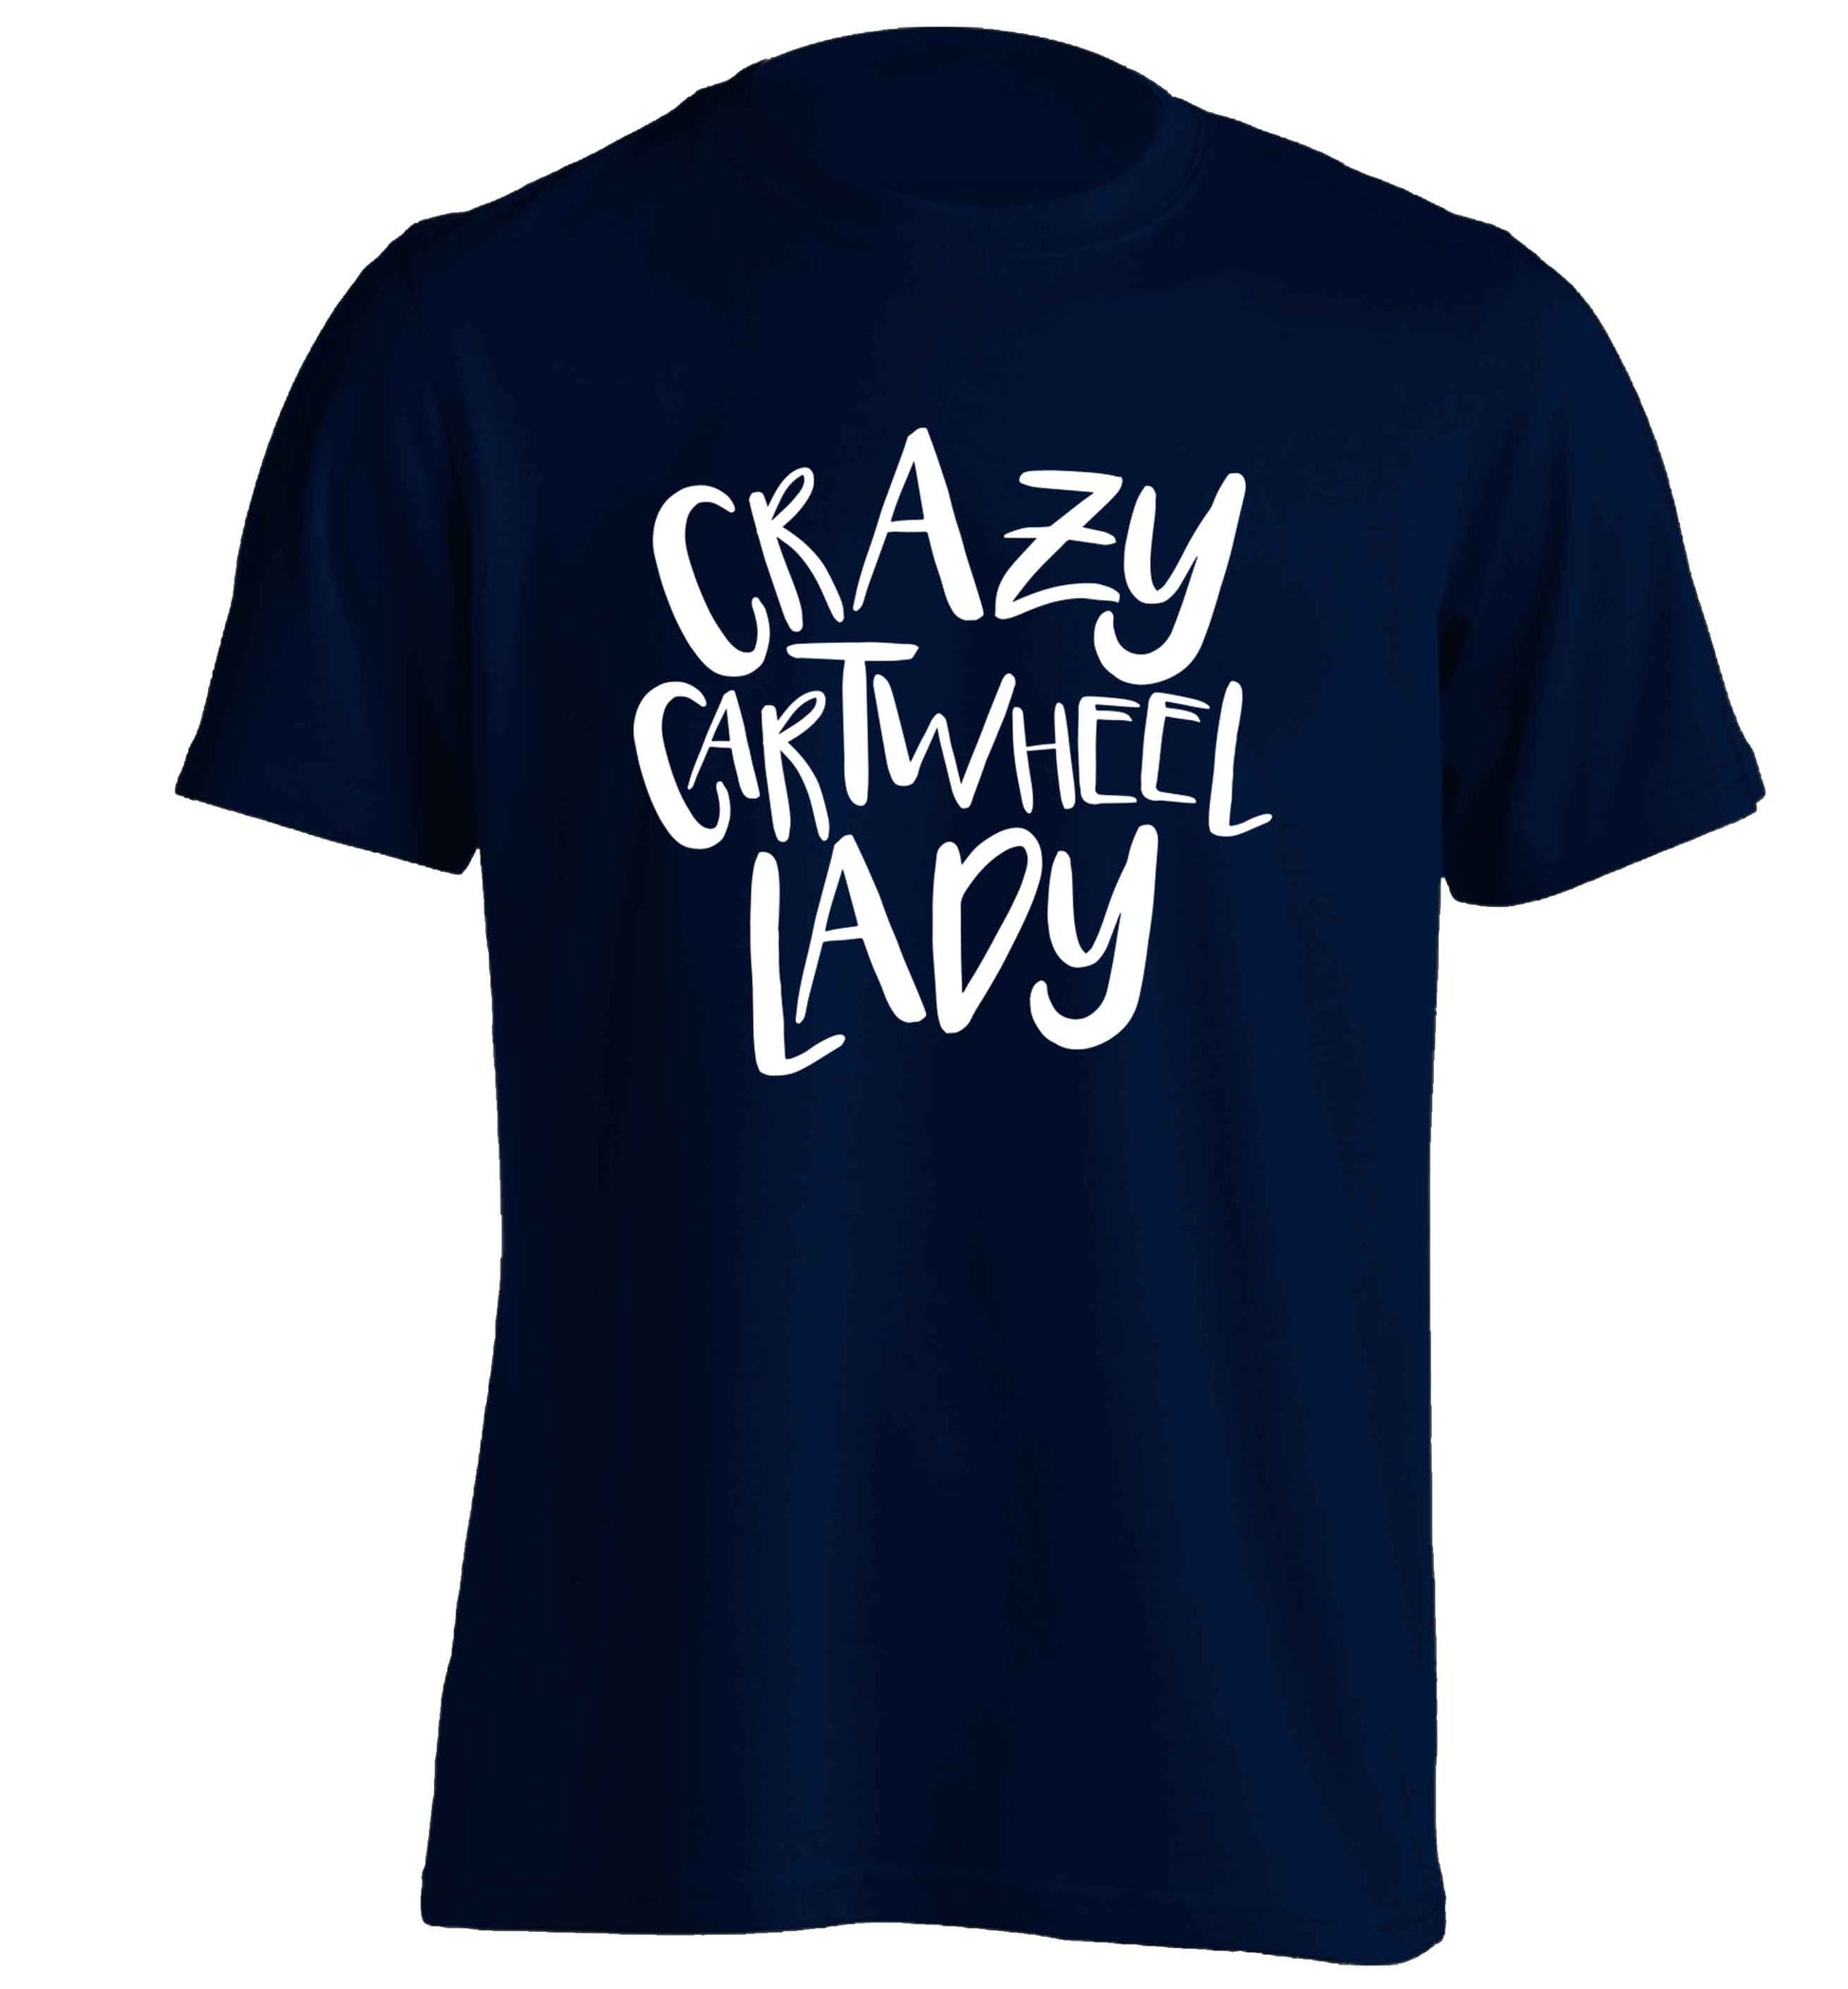 Crazy cartwheel lady adults unisex navy Tshirt 2XL